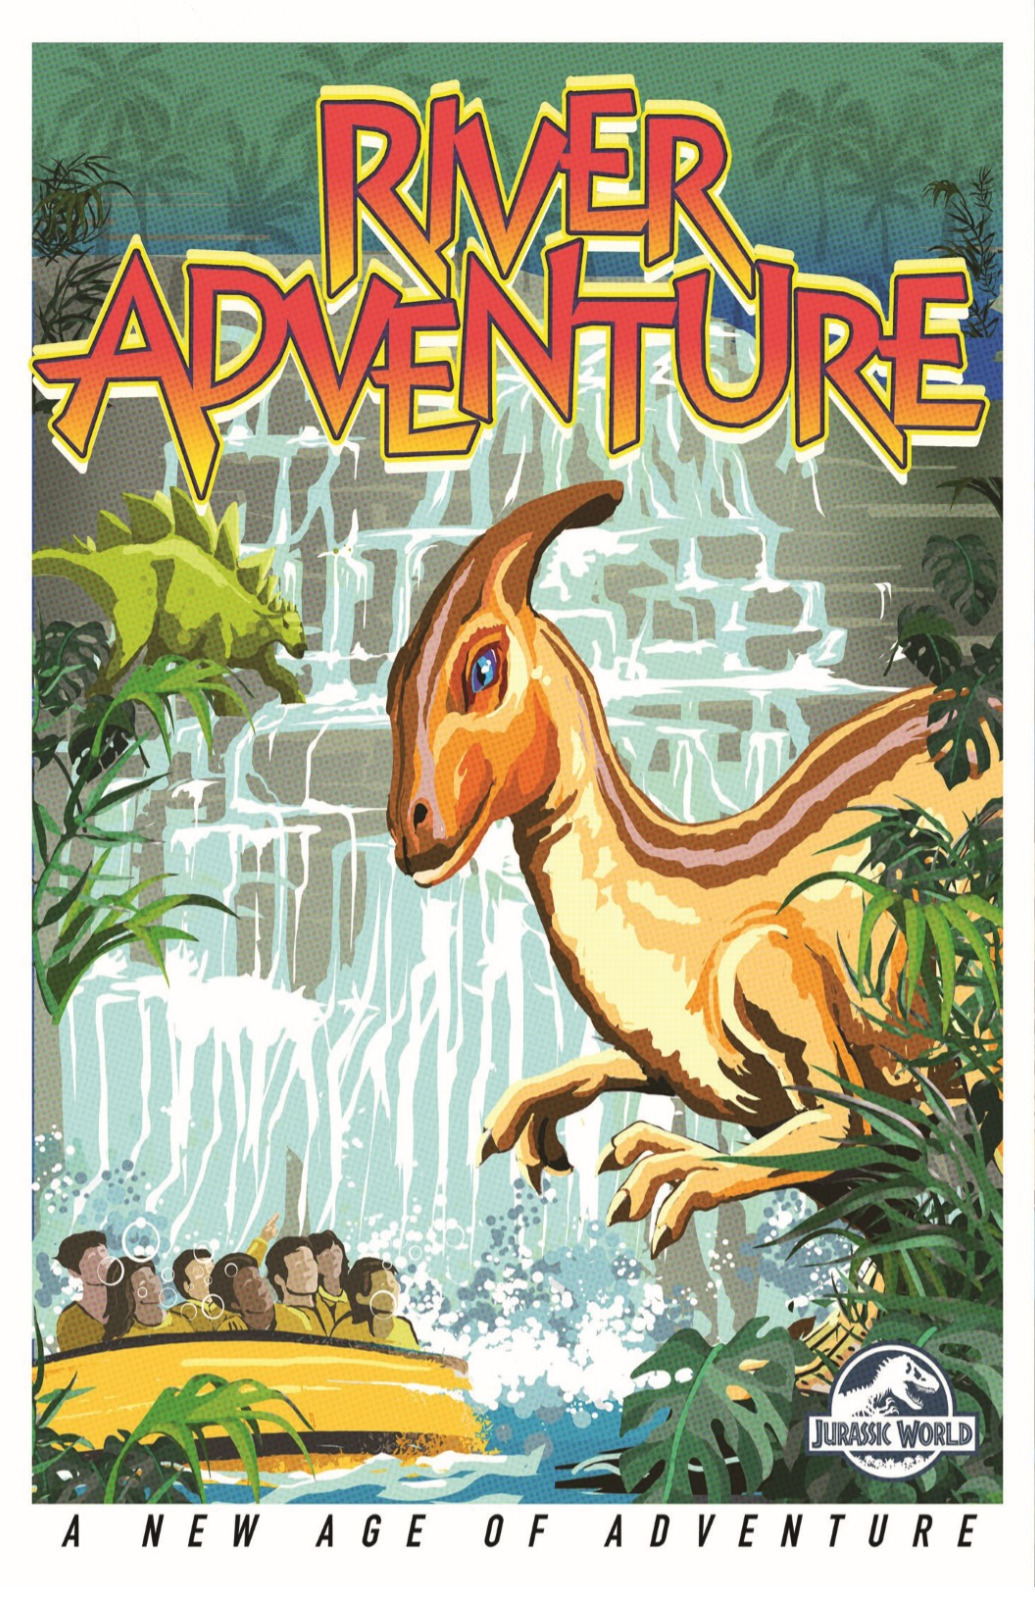 Jurassic World Attraction Poster Print 11x17 River Adventure Universal Orlando